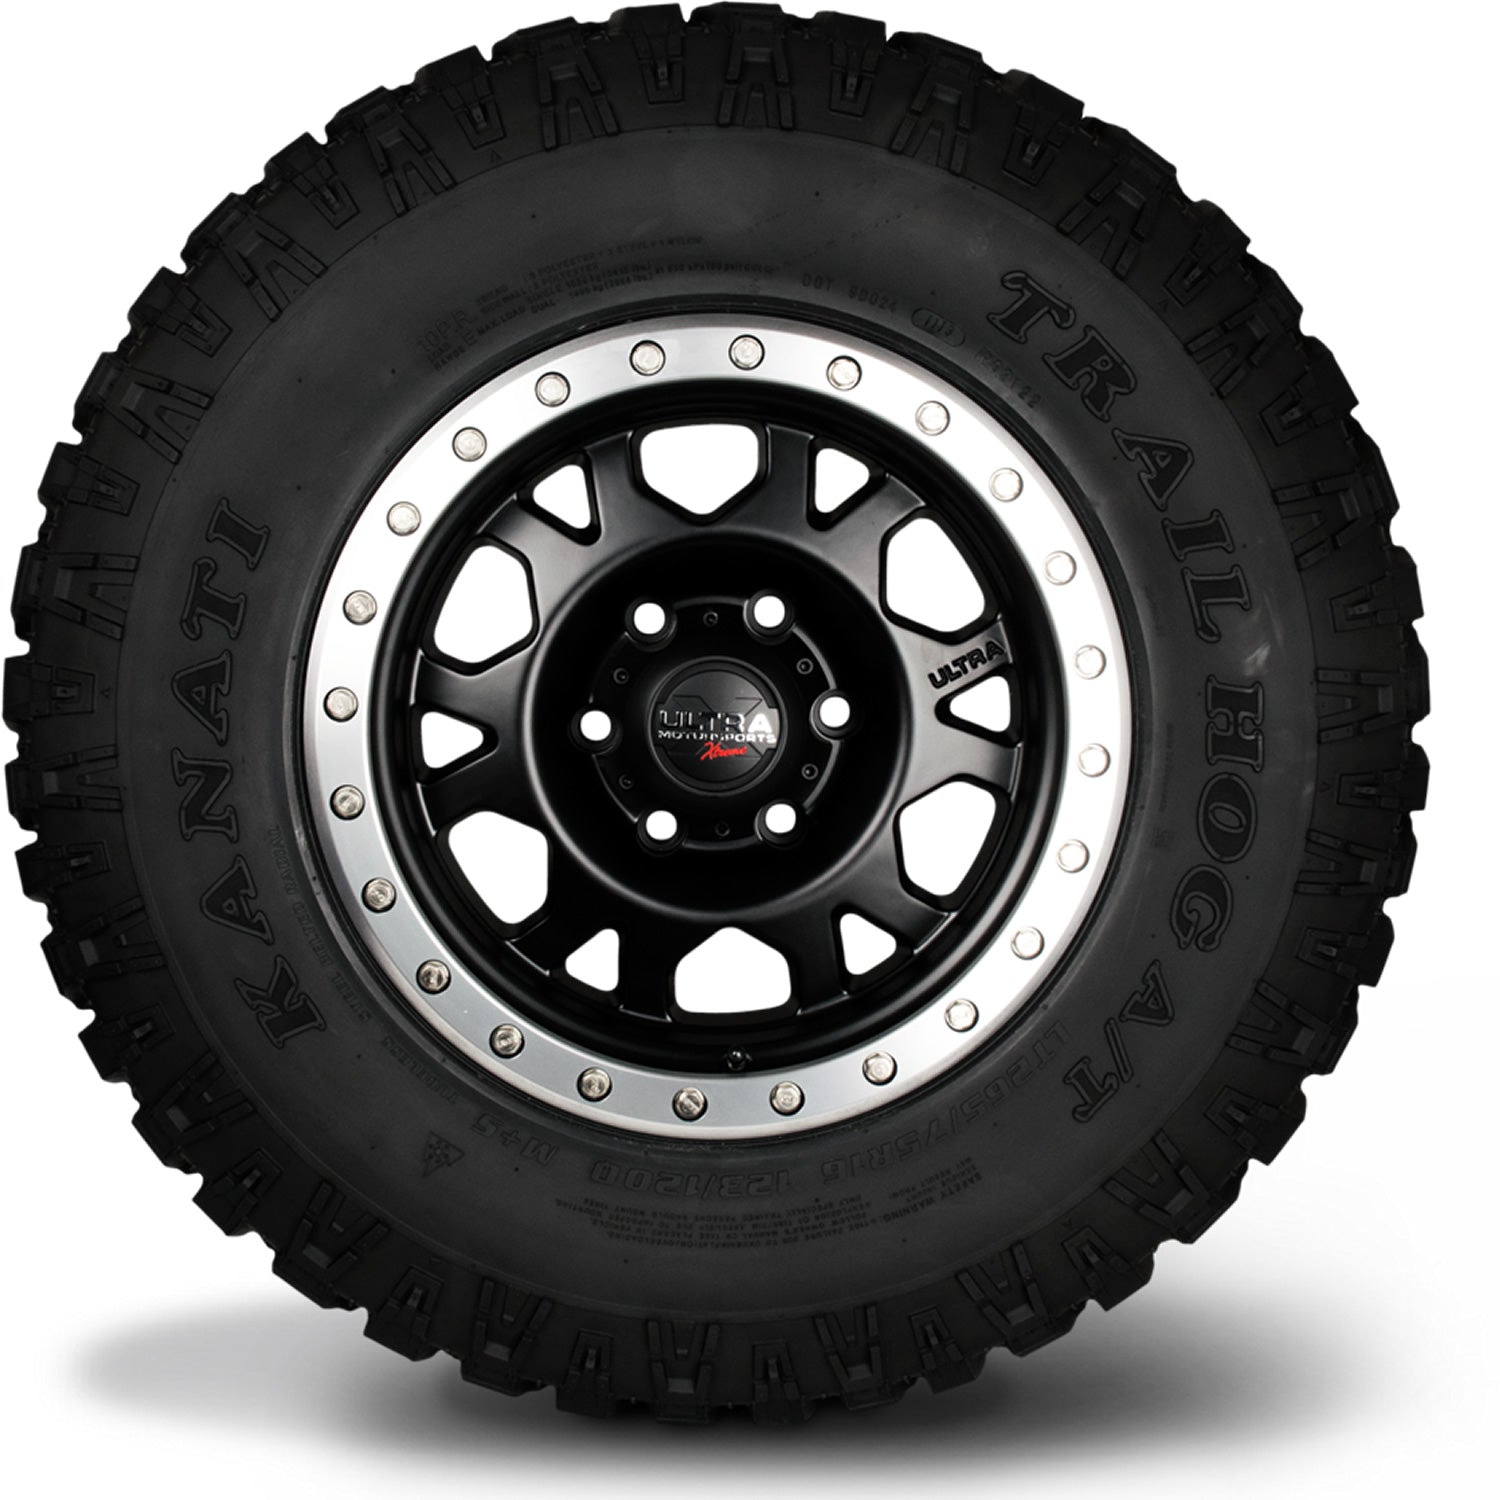 KANATI TRAIL HOG 35X12.50R20LT Tires